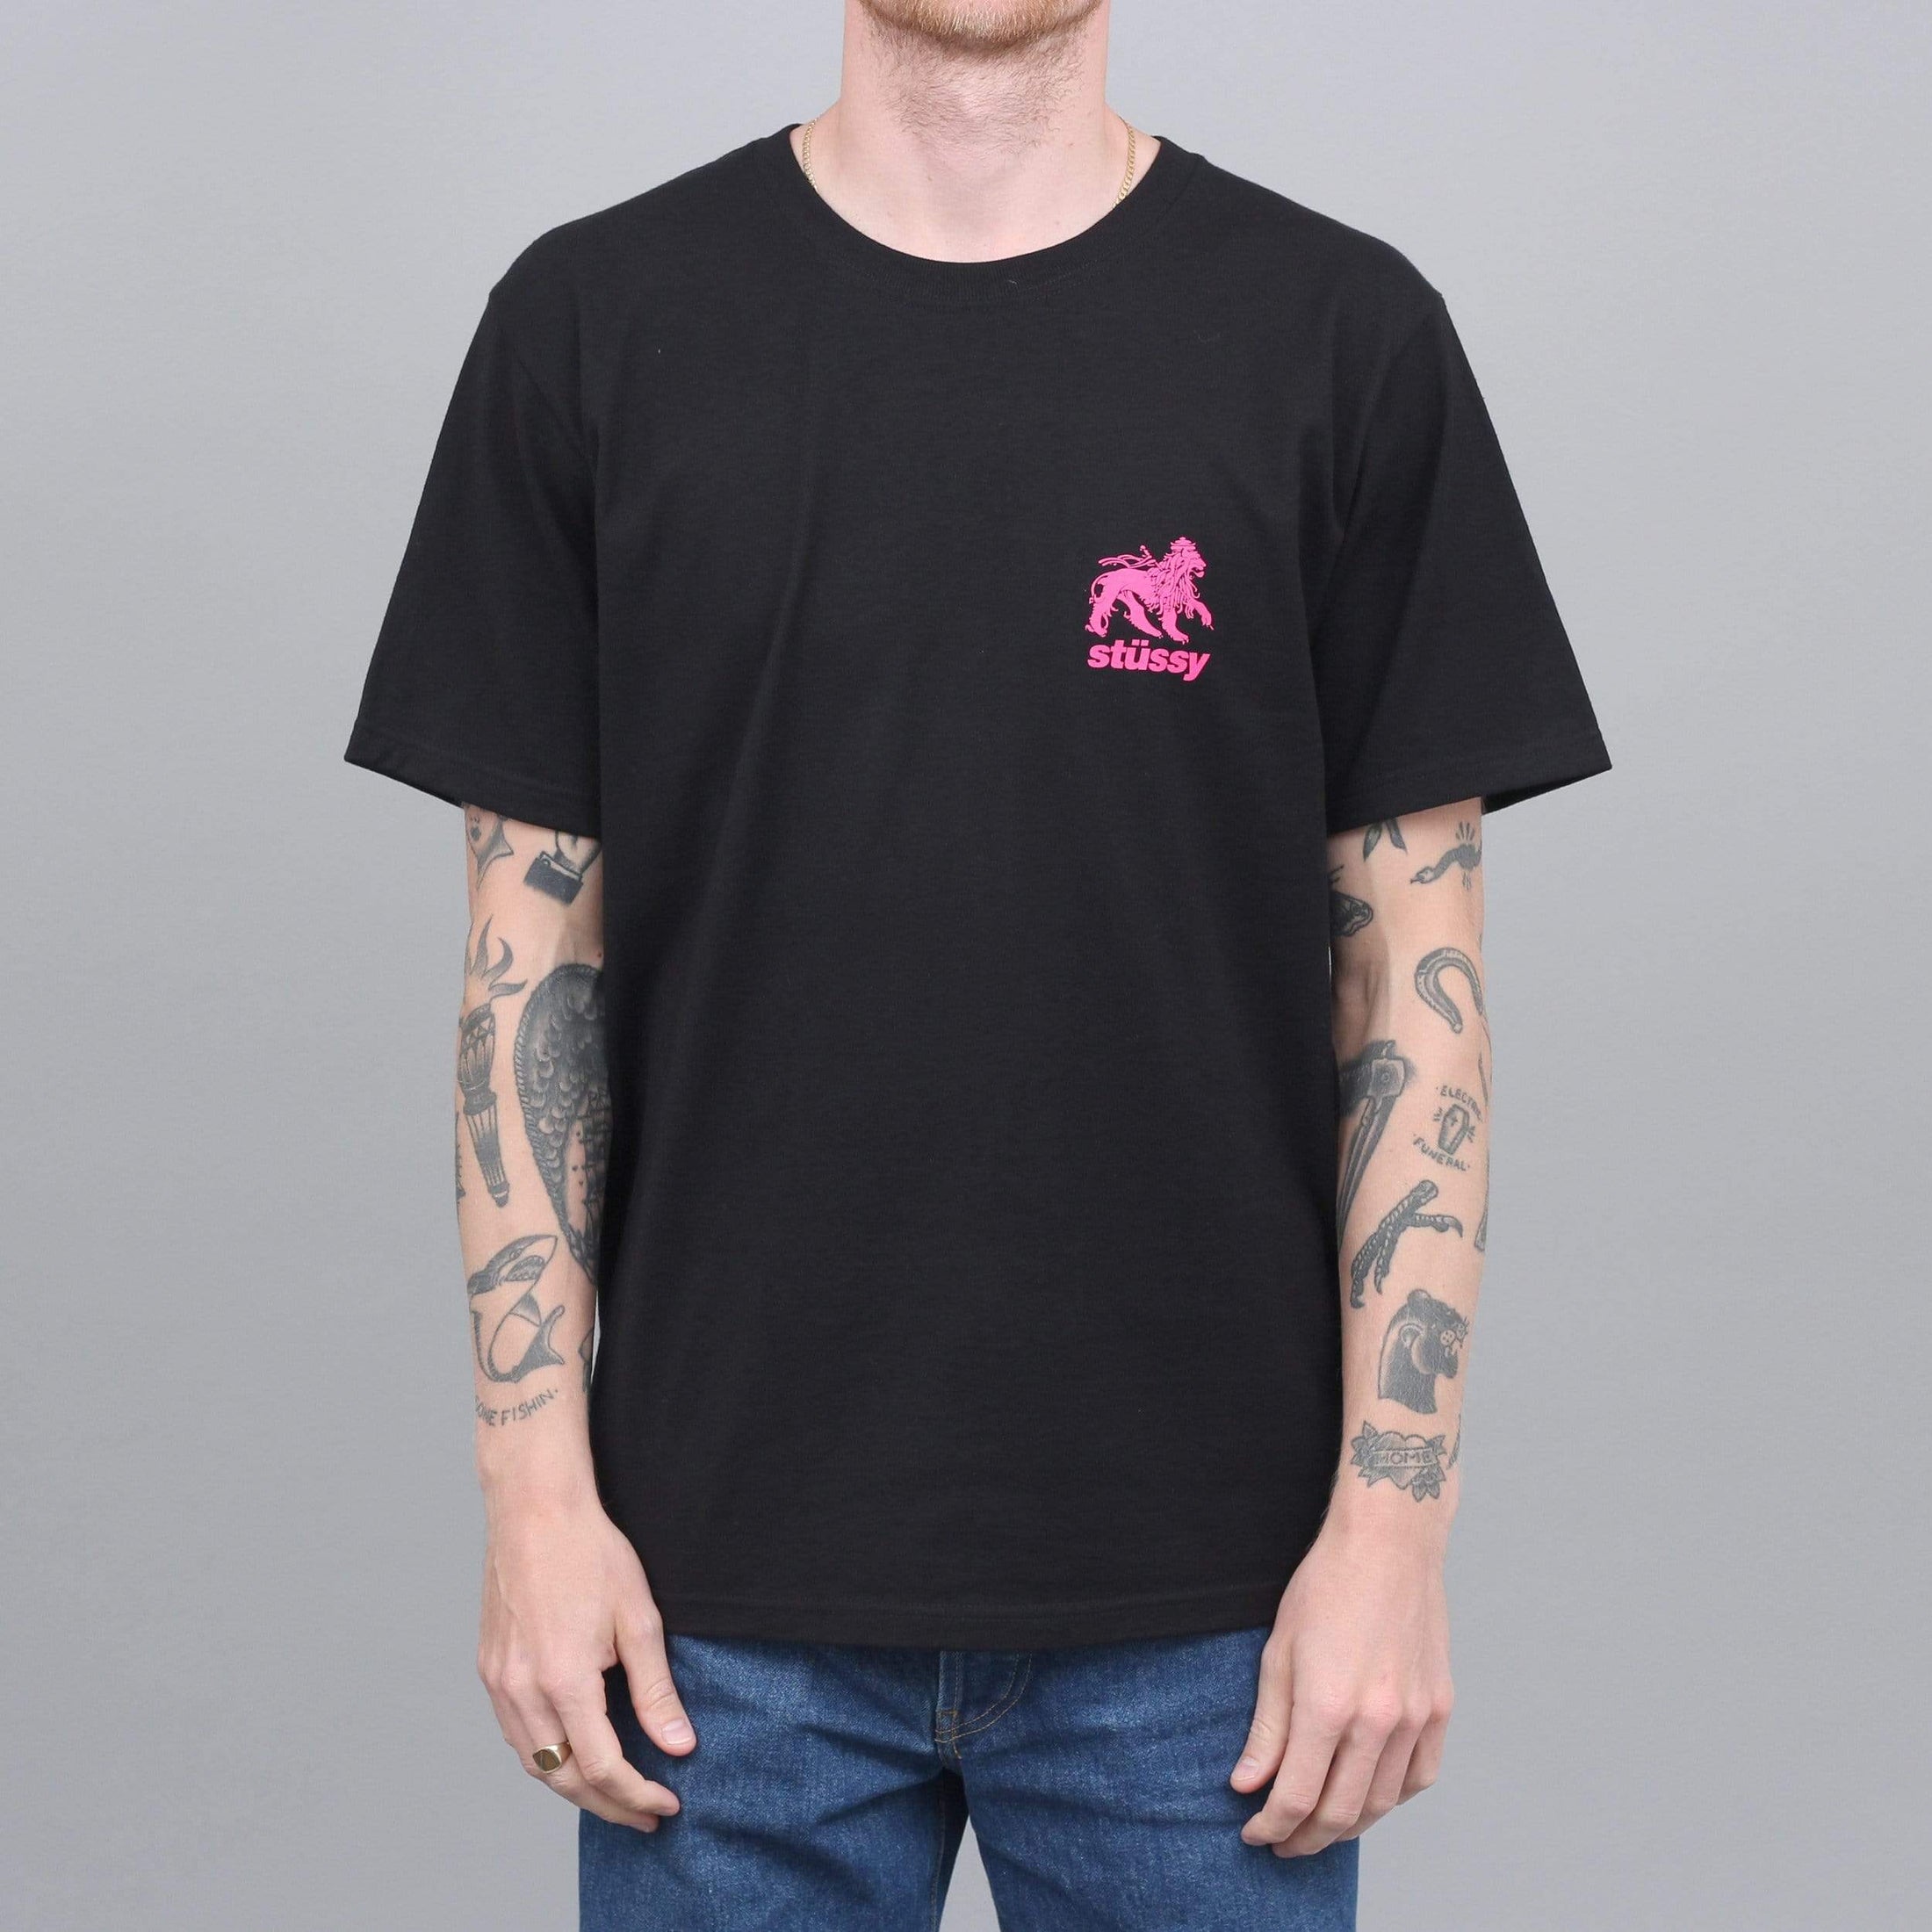 Stussy Rasta Lion T-Shirt Black